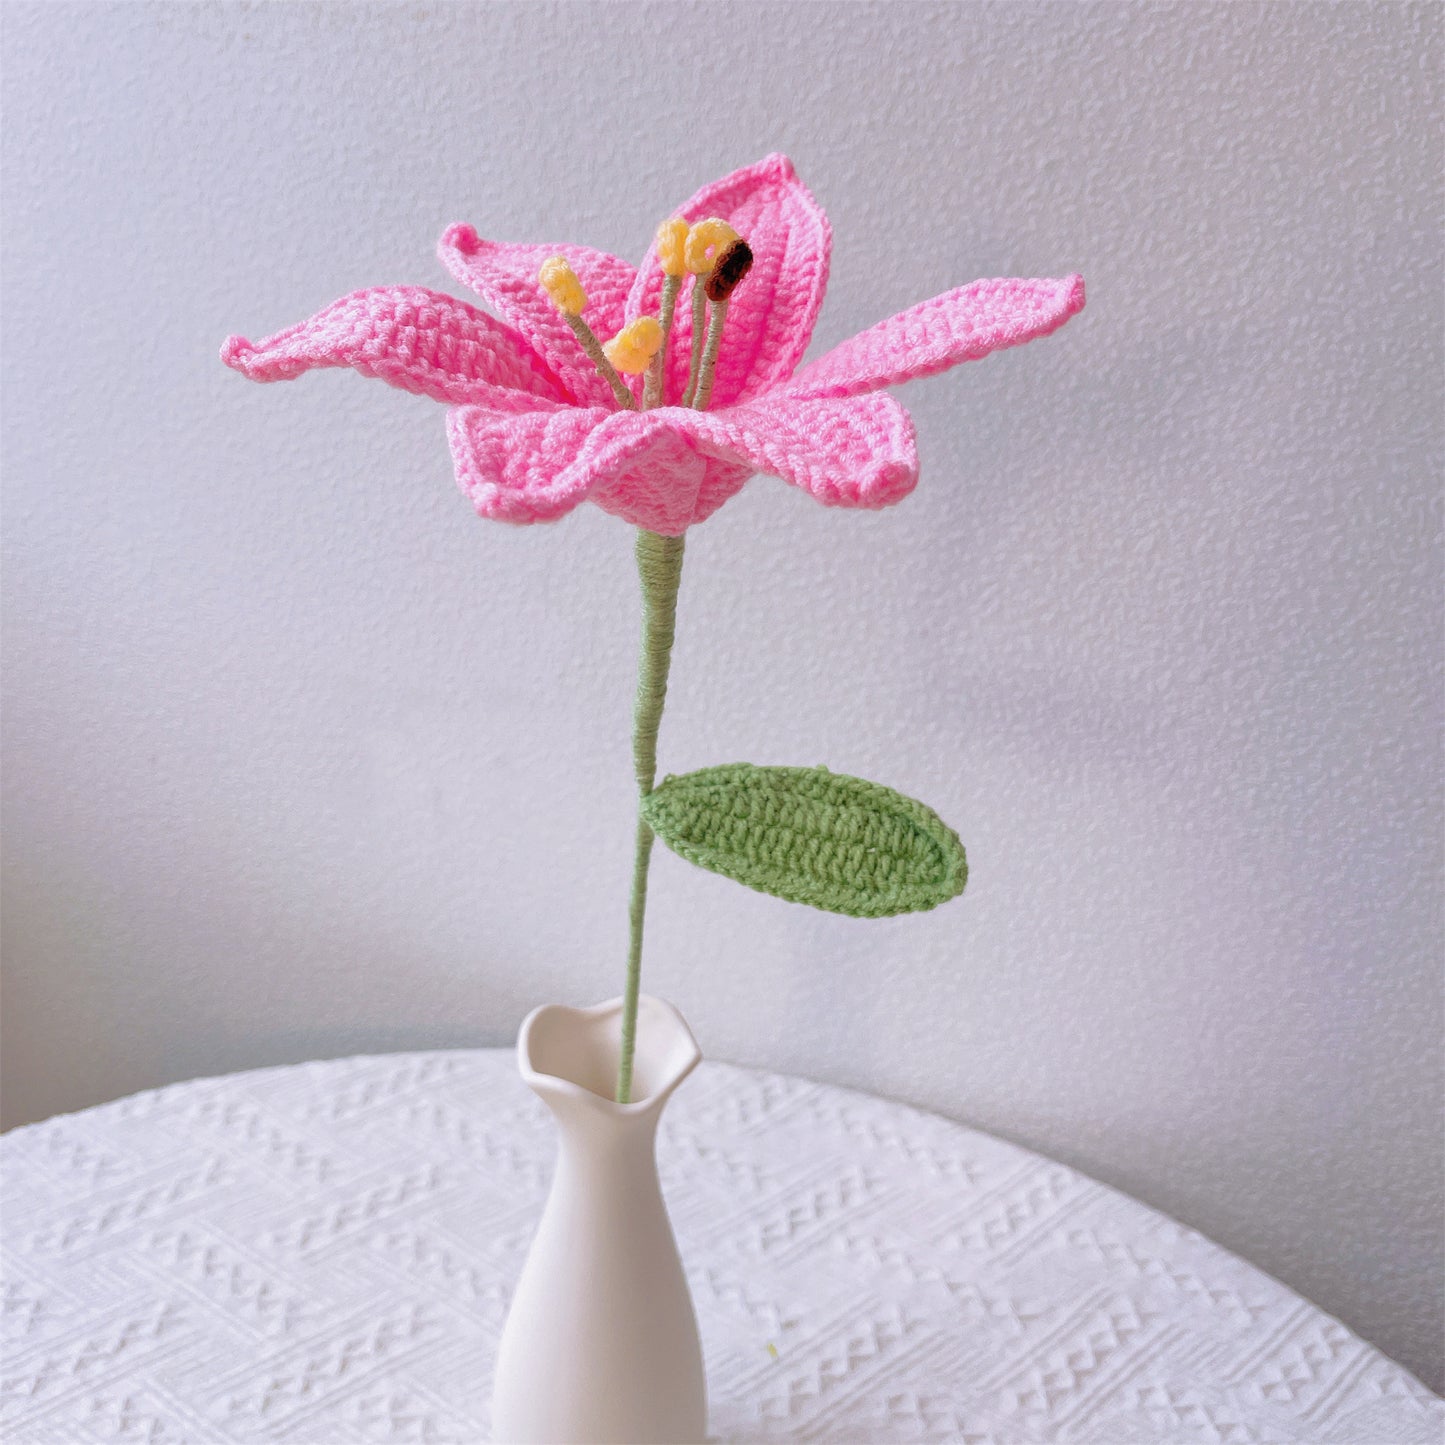 Handmade Crocheted Bouquet of Roses, Lilies, Lavender & More - Beautiful PINK Arrangement